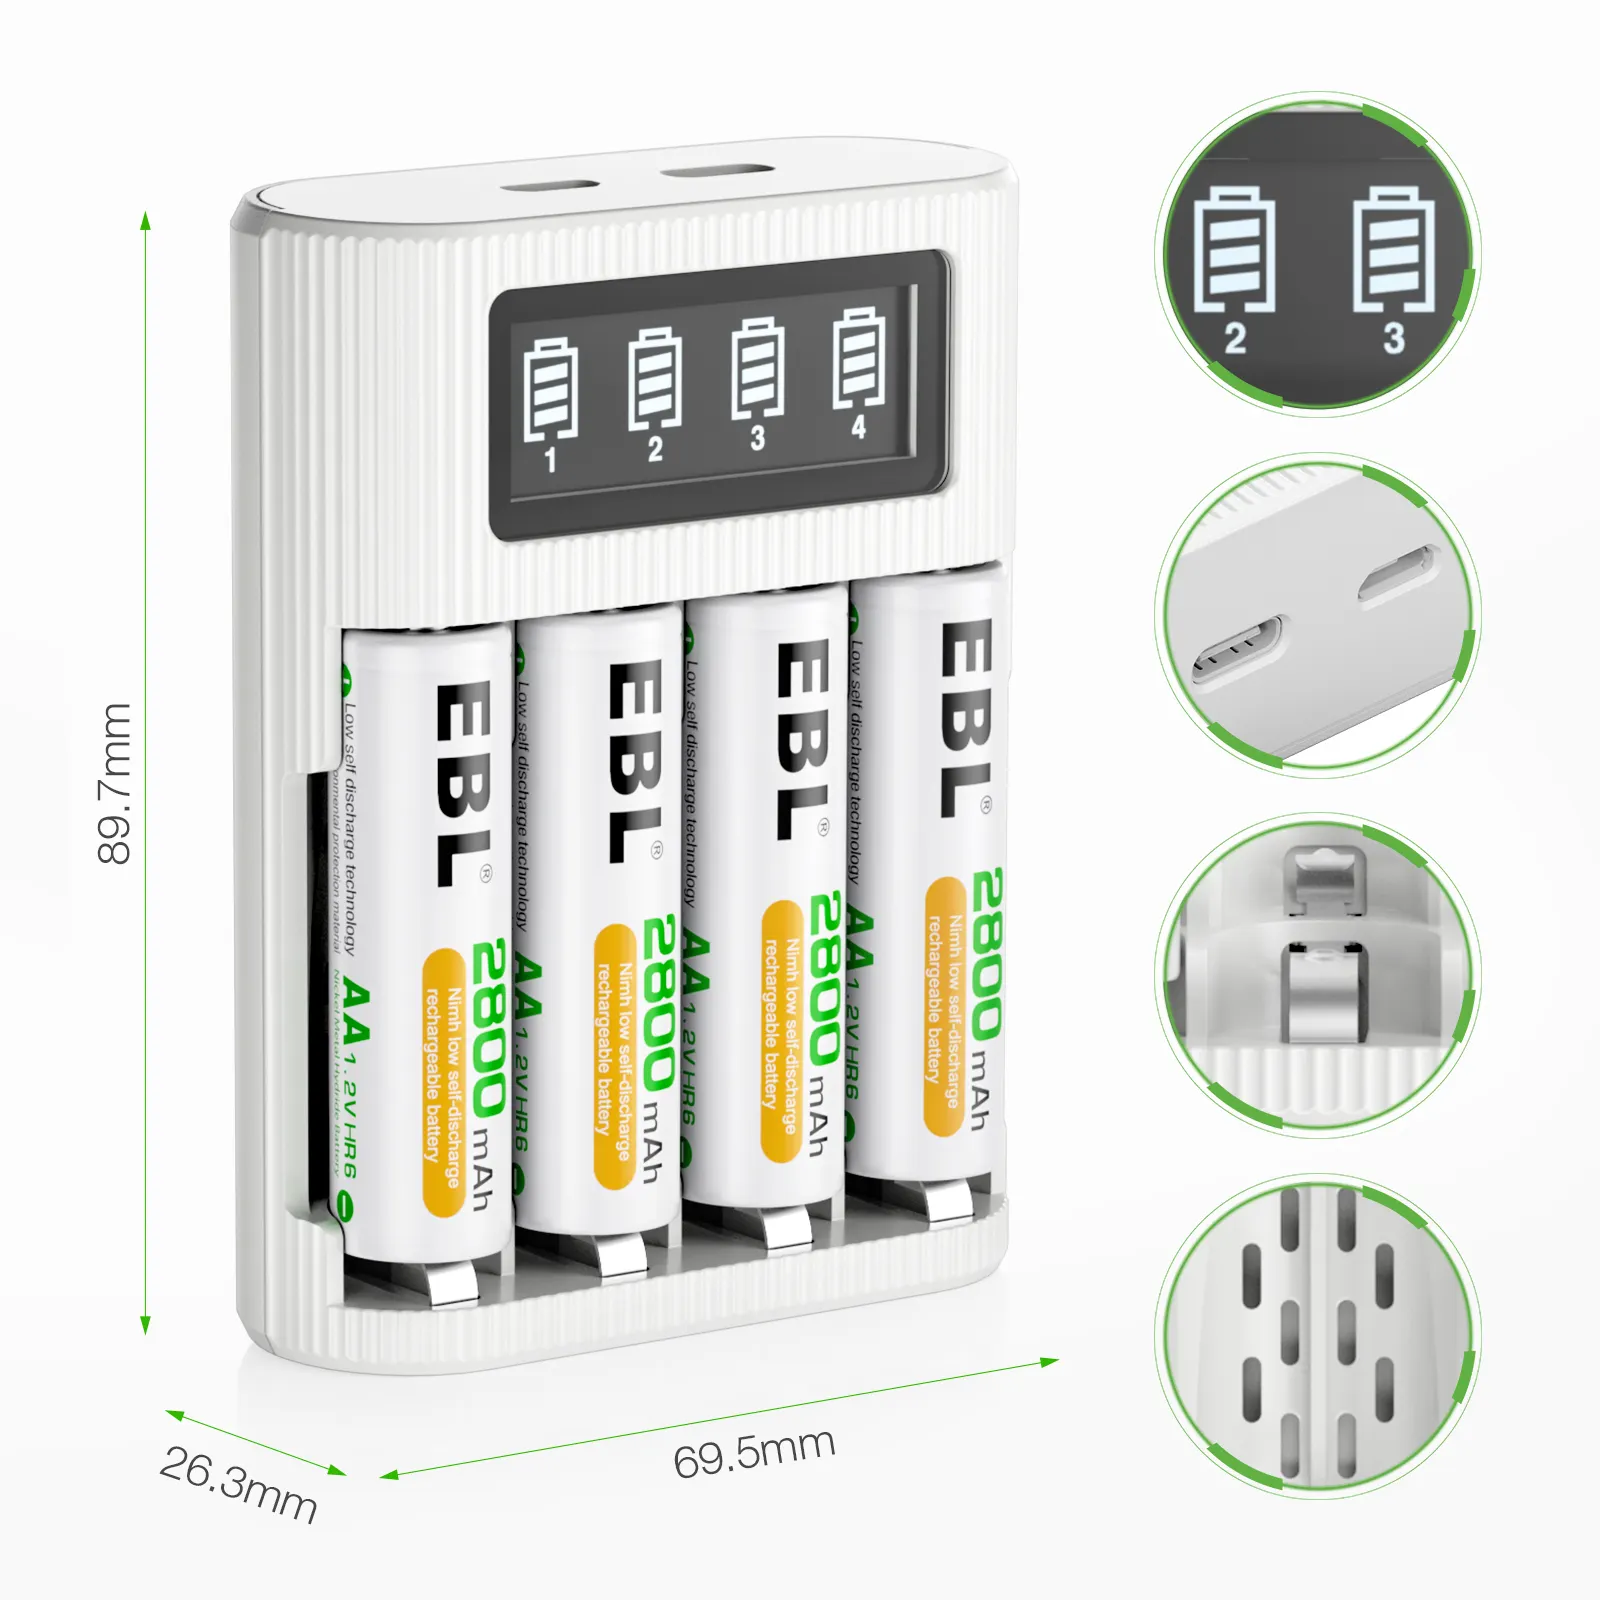 Bateria recarregável com carregador USB para celular Smart Nimh Aa 4 slots, 1.2V 2800Mah Aa